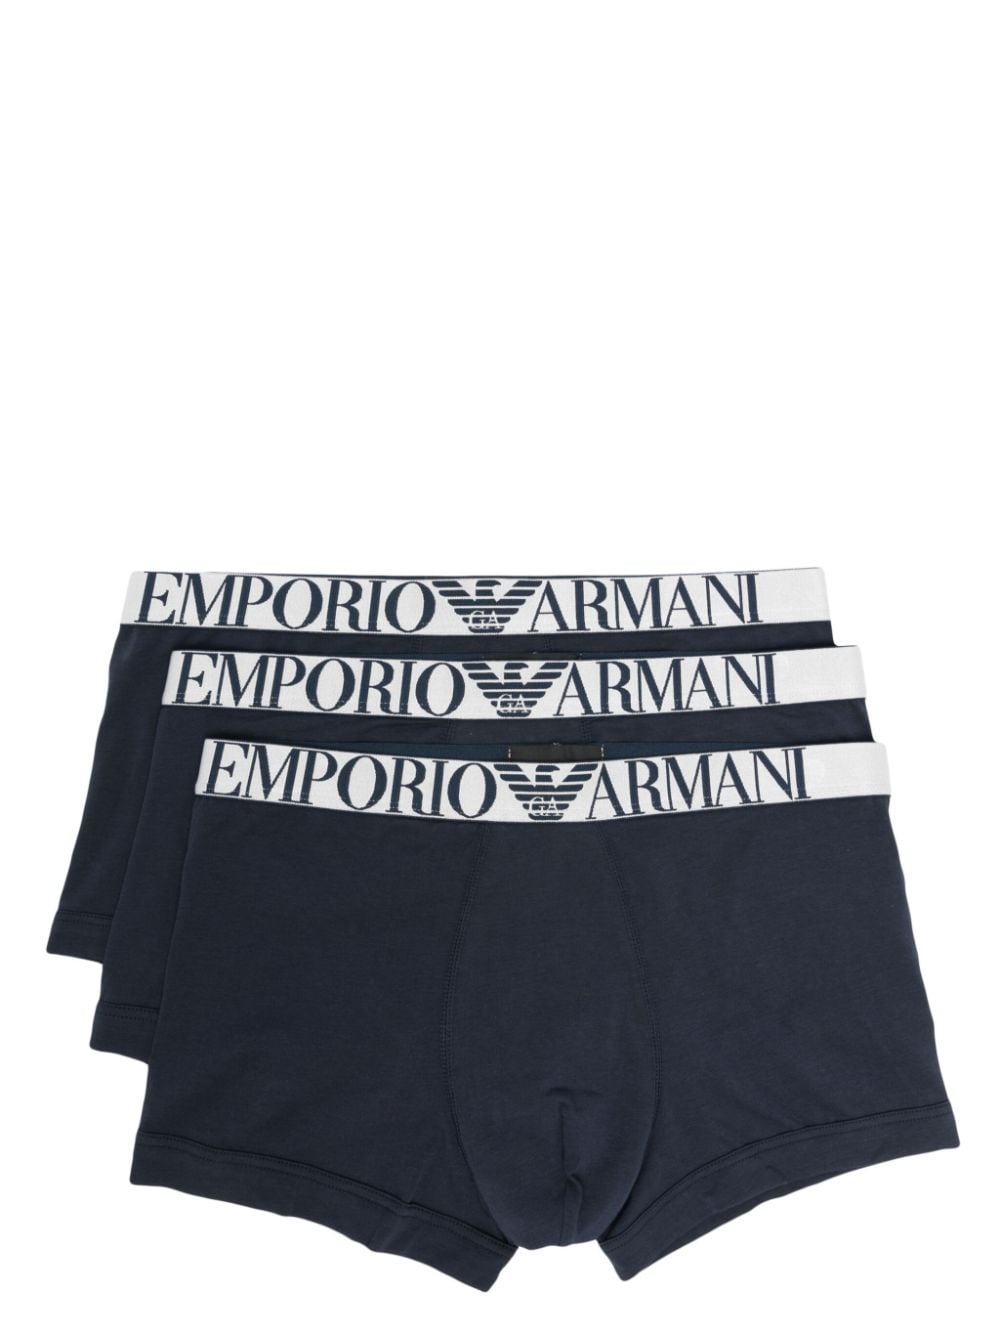 Image 1 of Emporio Armani logo-waistband cotton briefs (pack of three)